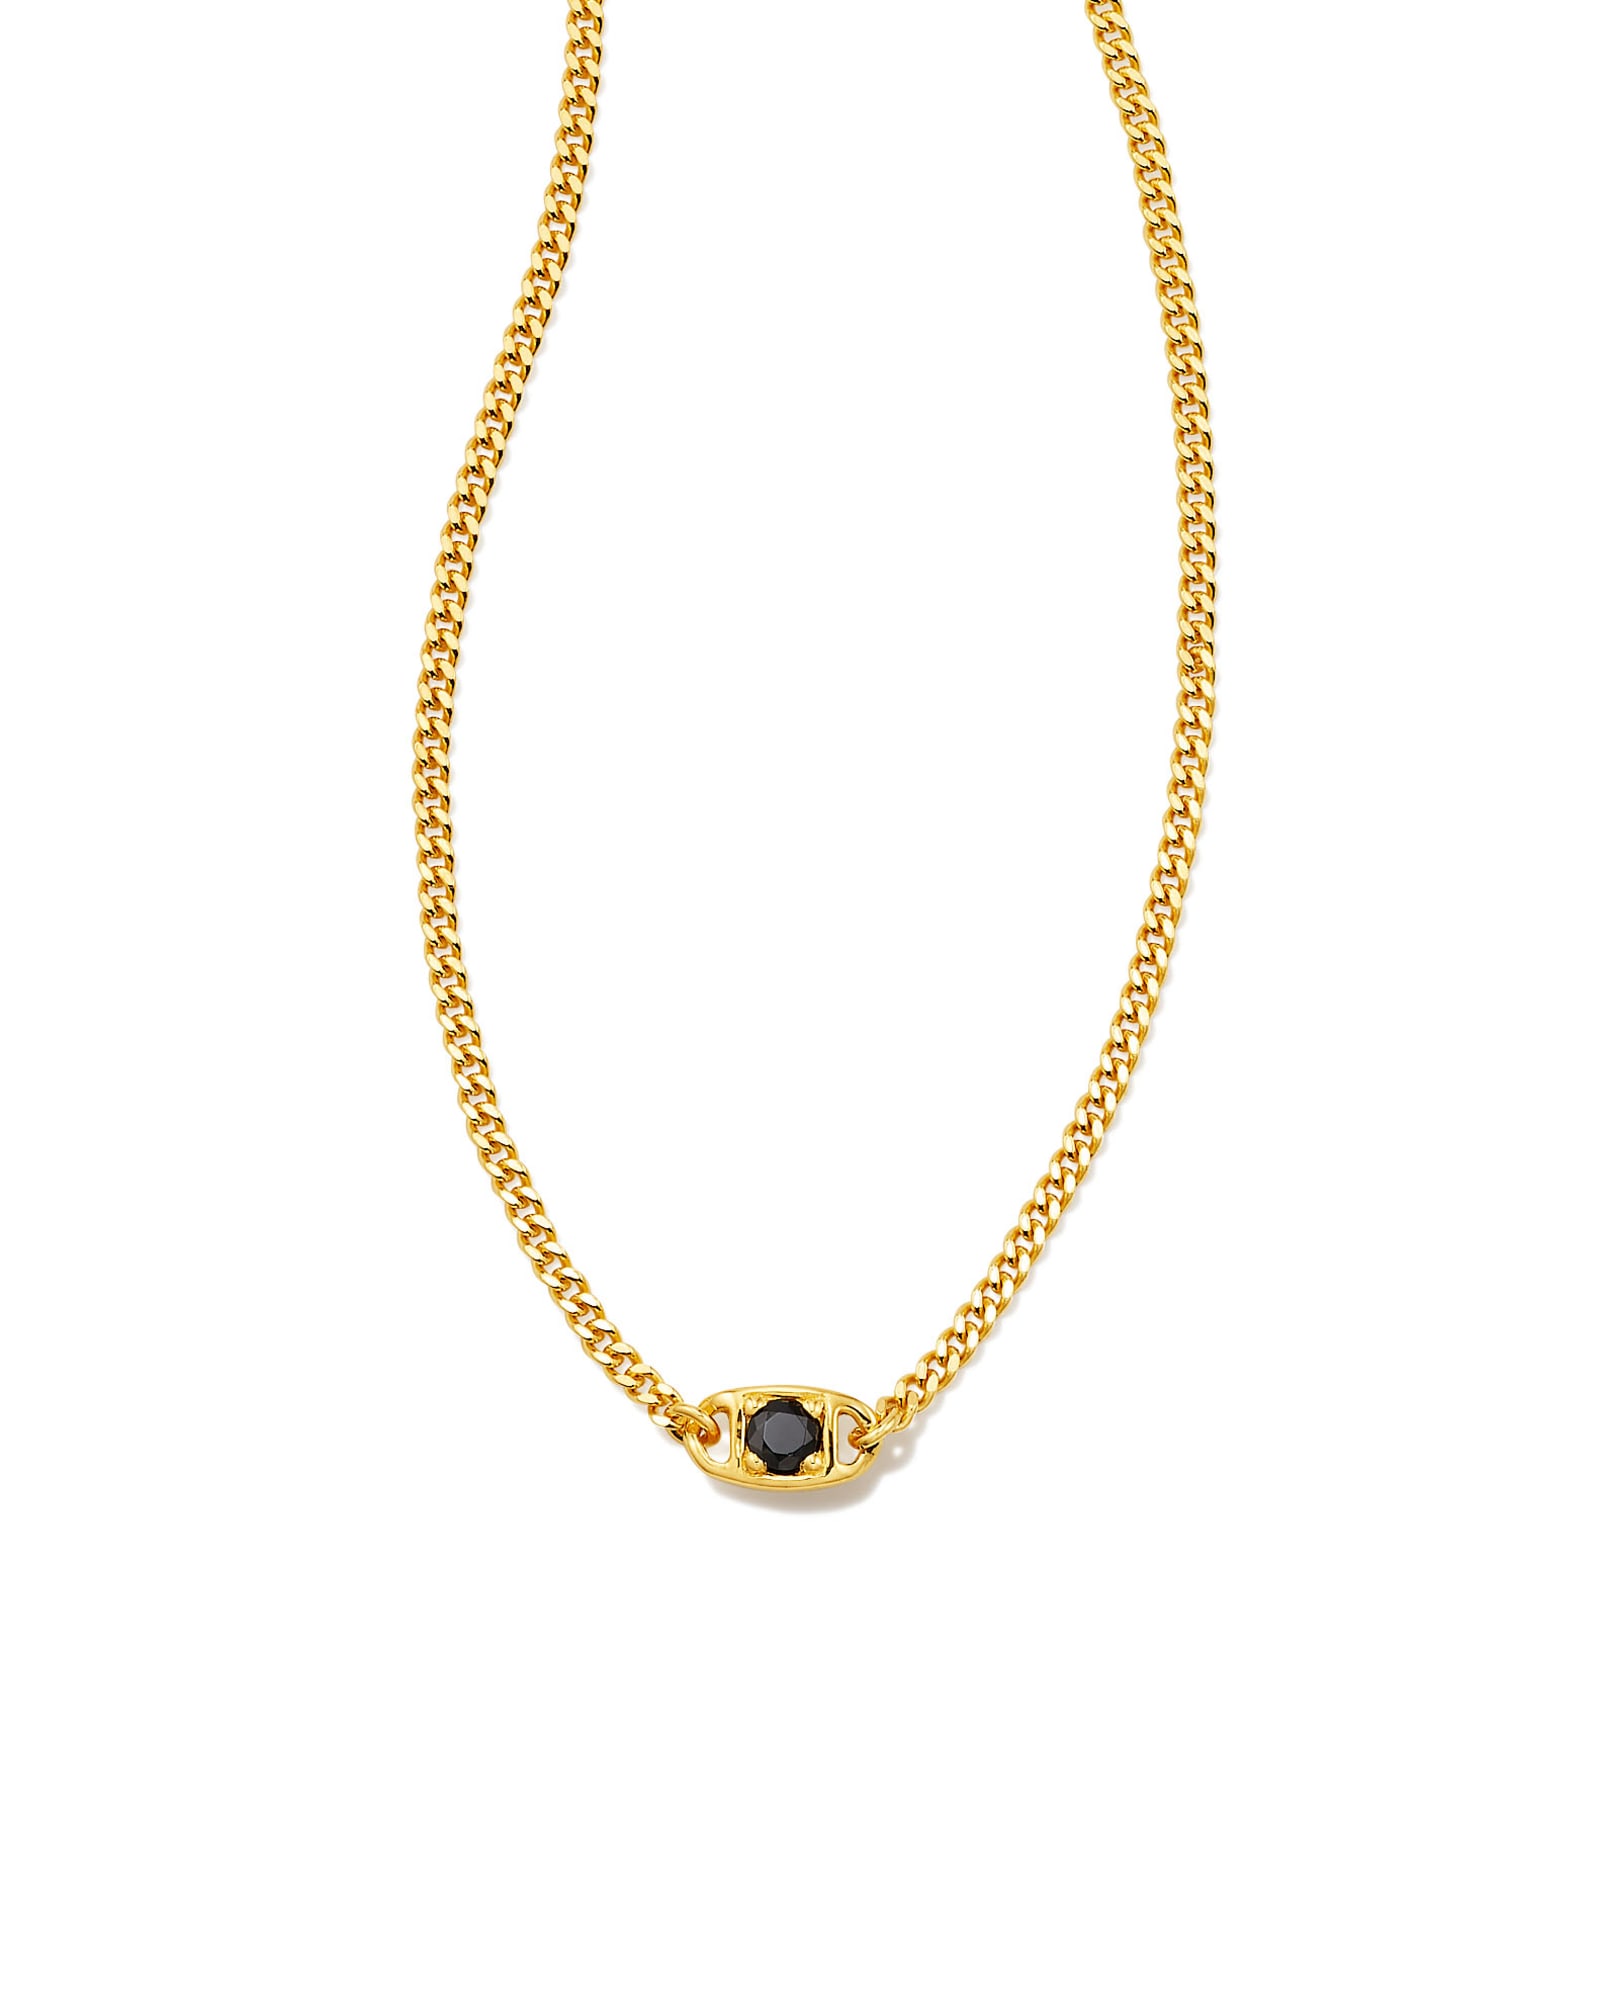 Delaney 18k Gold Vermeil Curb Chain Pendant Necklace in Black Spinel